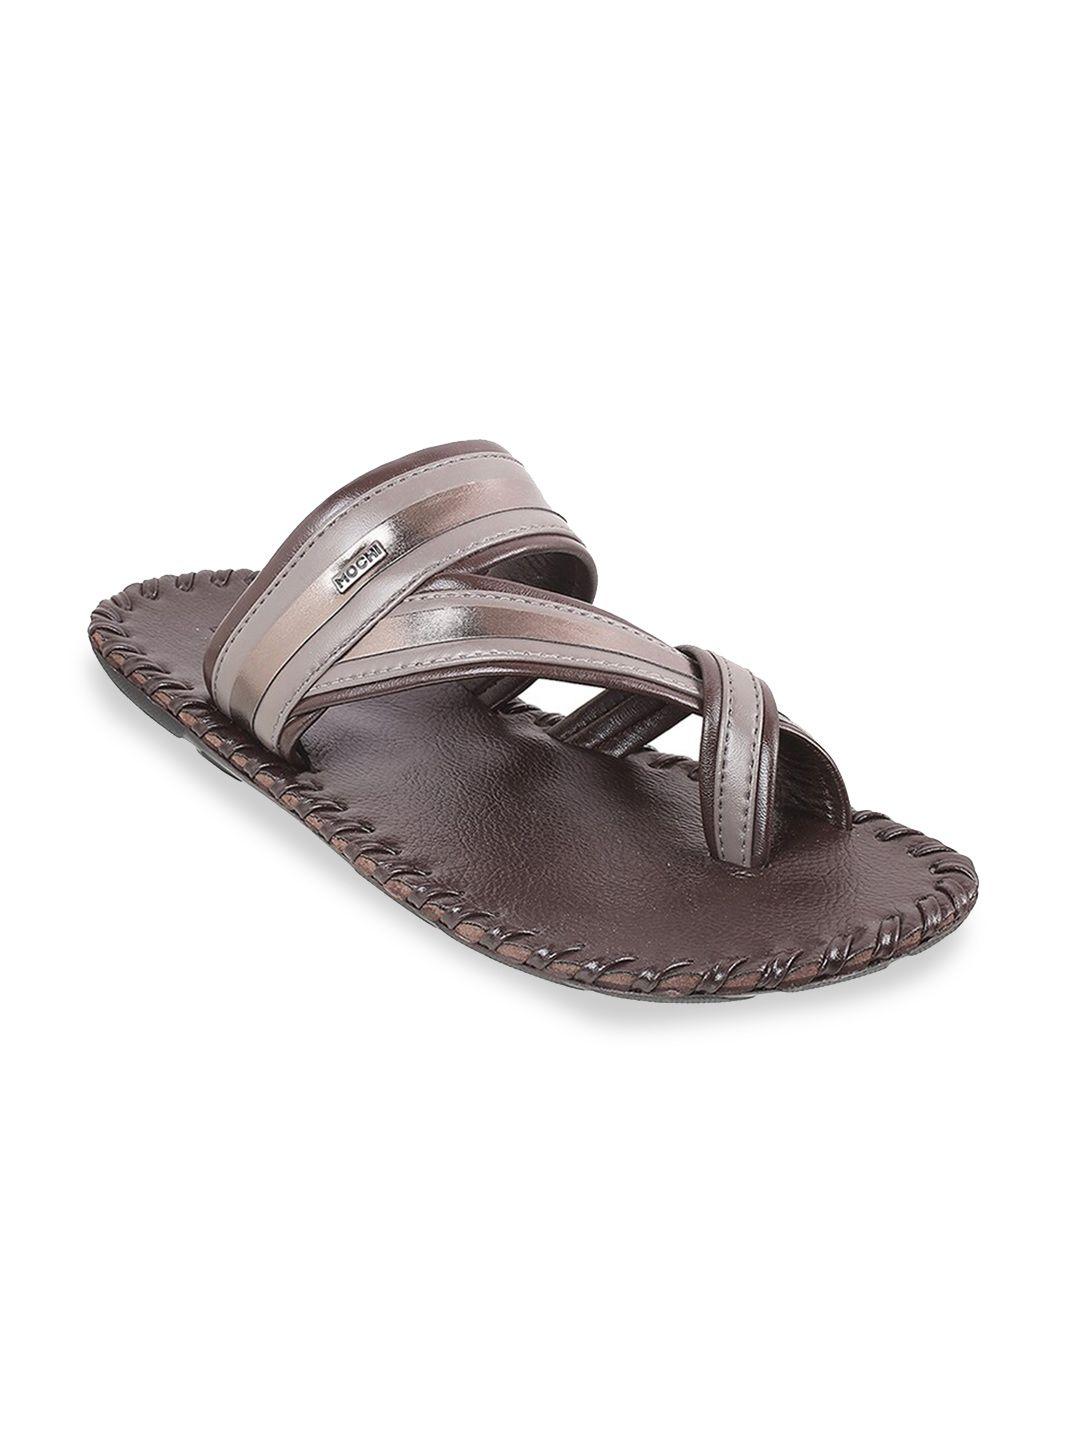 mochi men brown leather comfort sandals